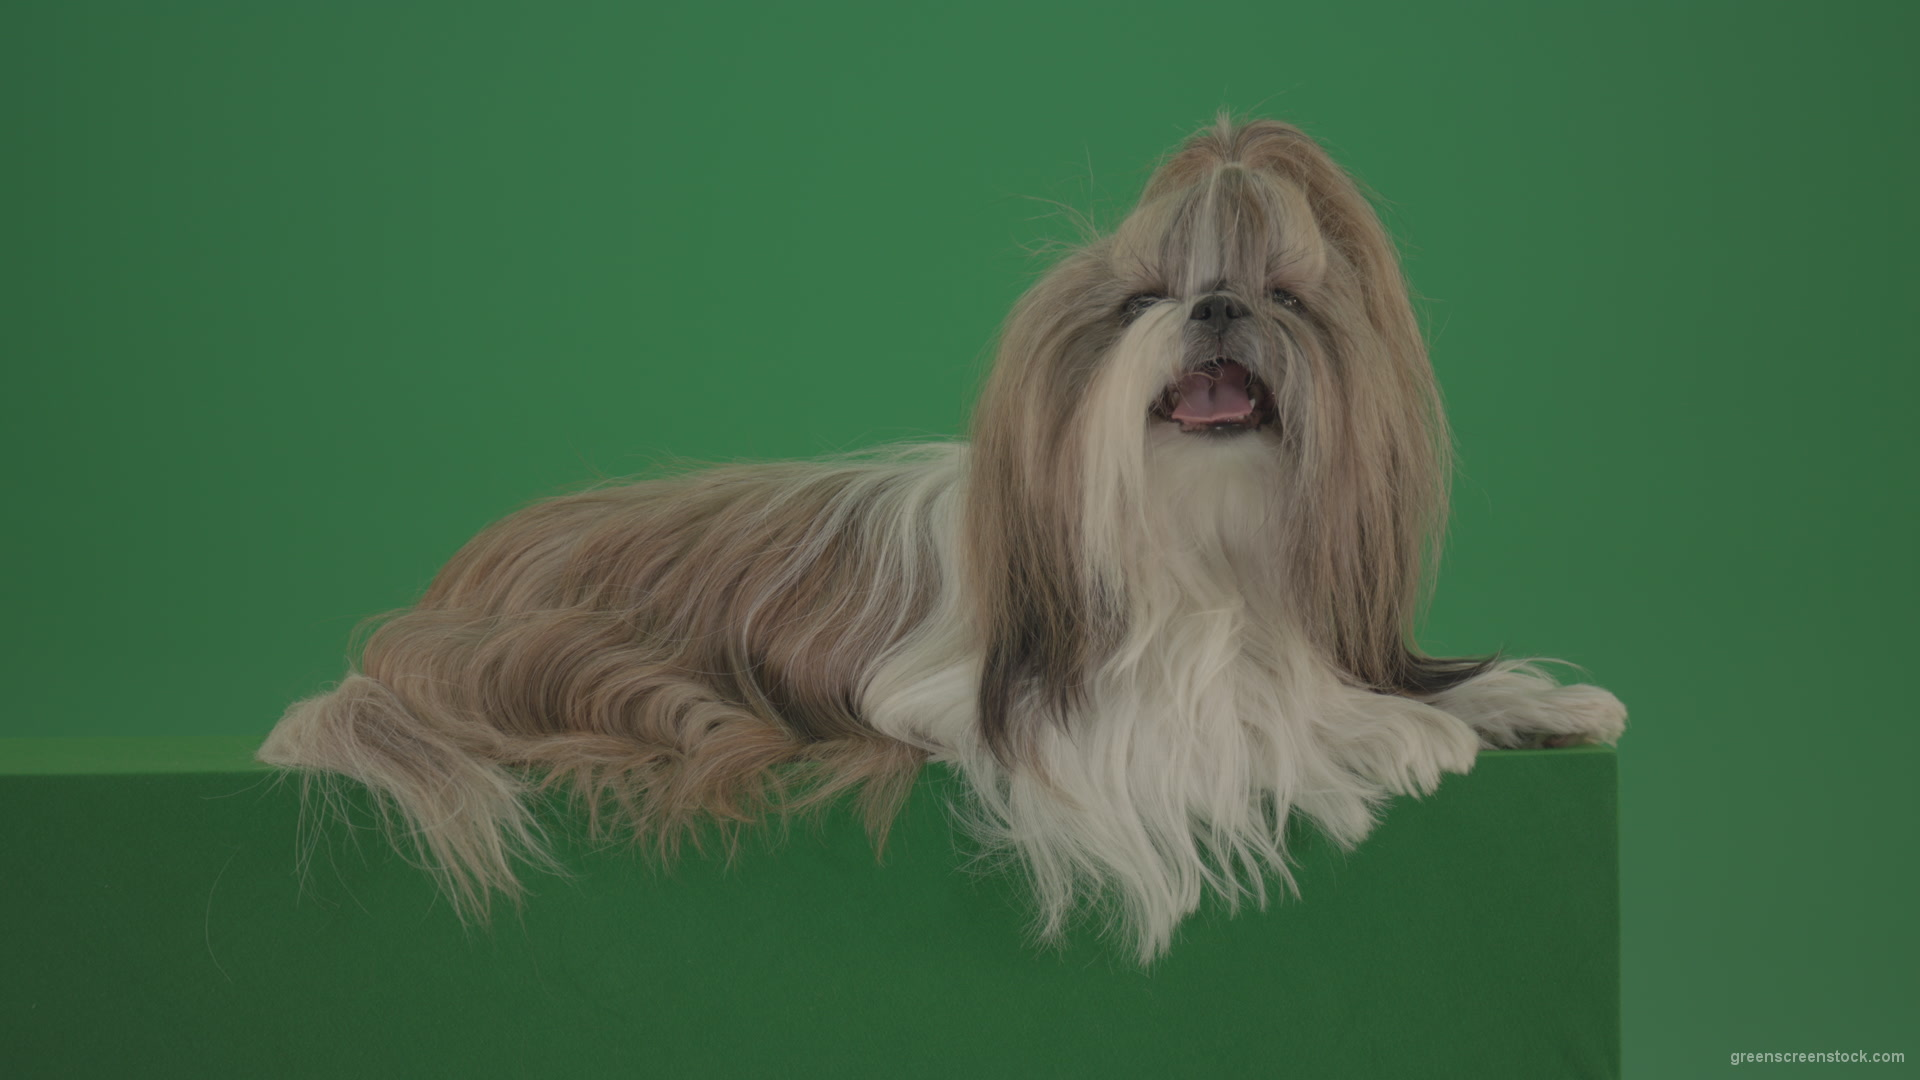 vj video background Fashion-luxury-toy-dog-Shihtzu-chilling-on-green-screen-isolated-background-4K_003